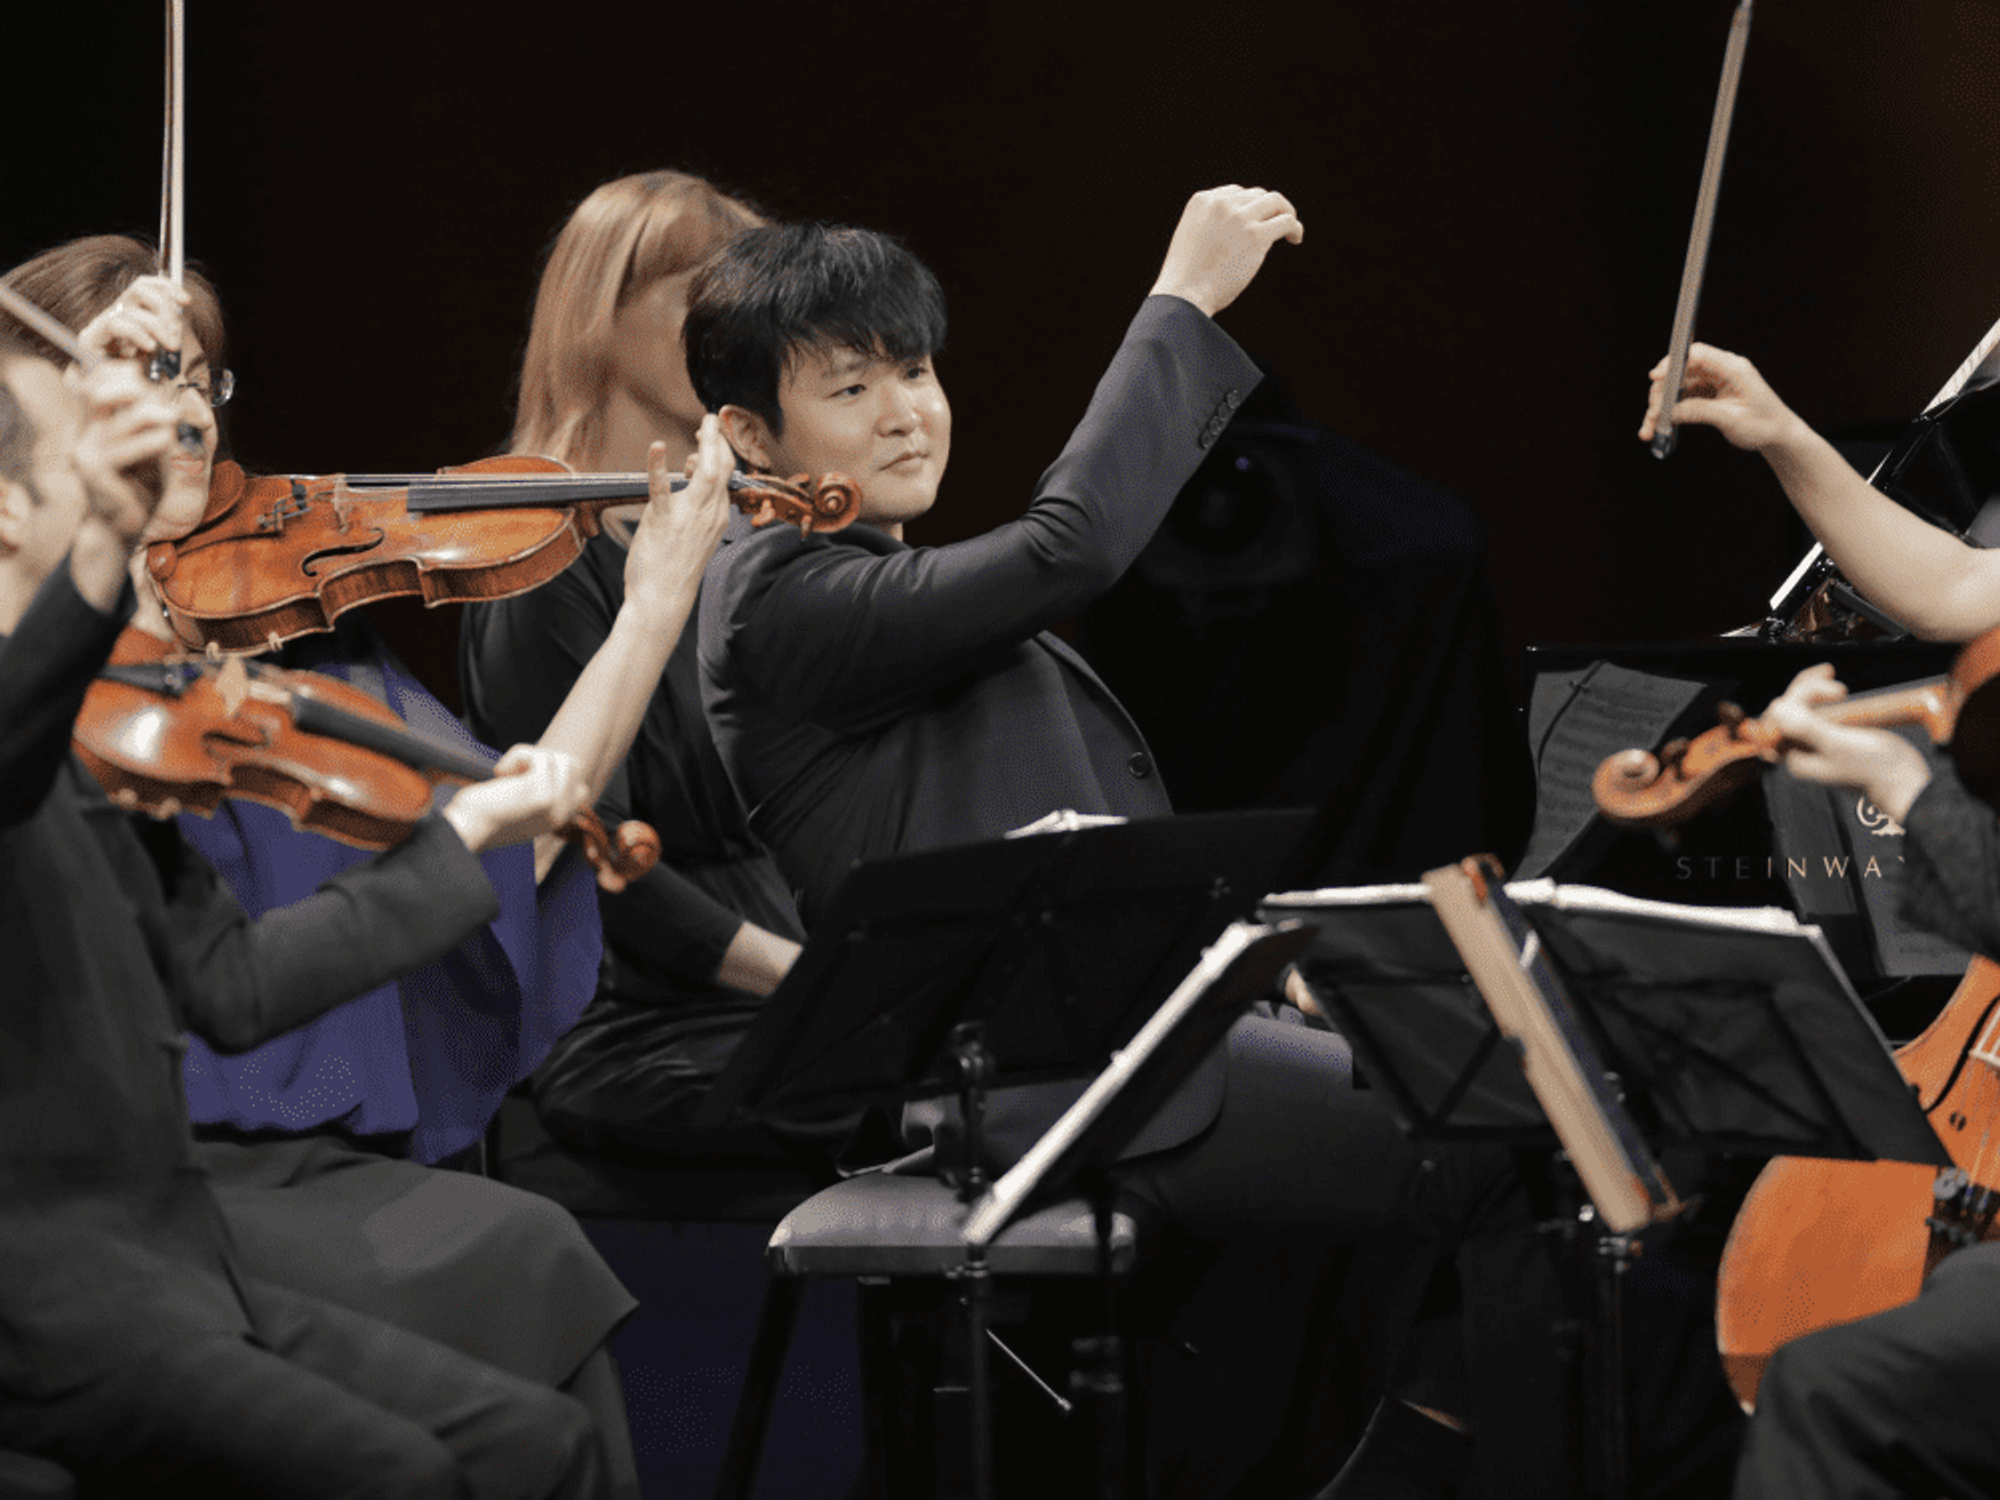 2017 Cliburn gold medalist Yekwon Sunwoo returns to play Rachmaninoff's Piano Concerto No. 3.